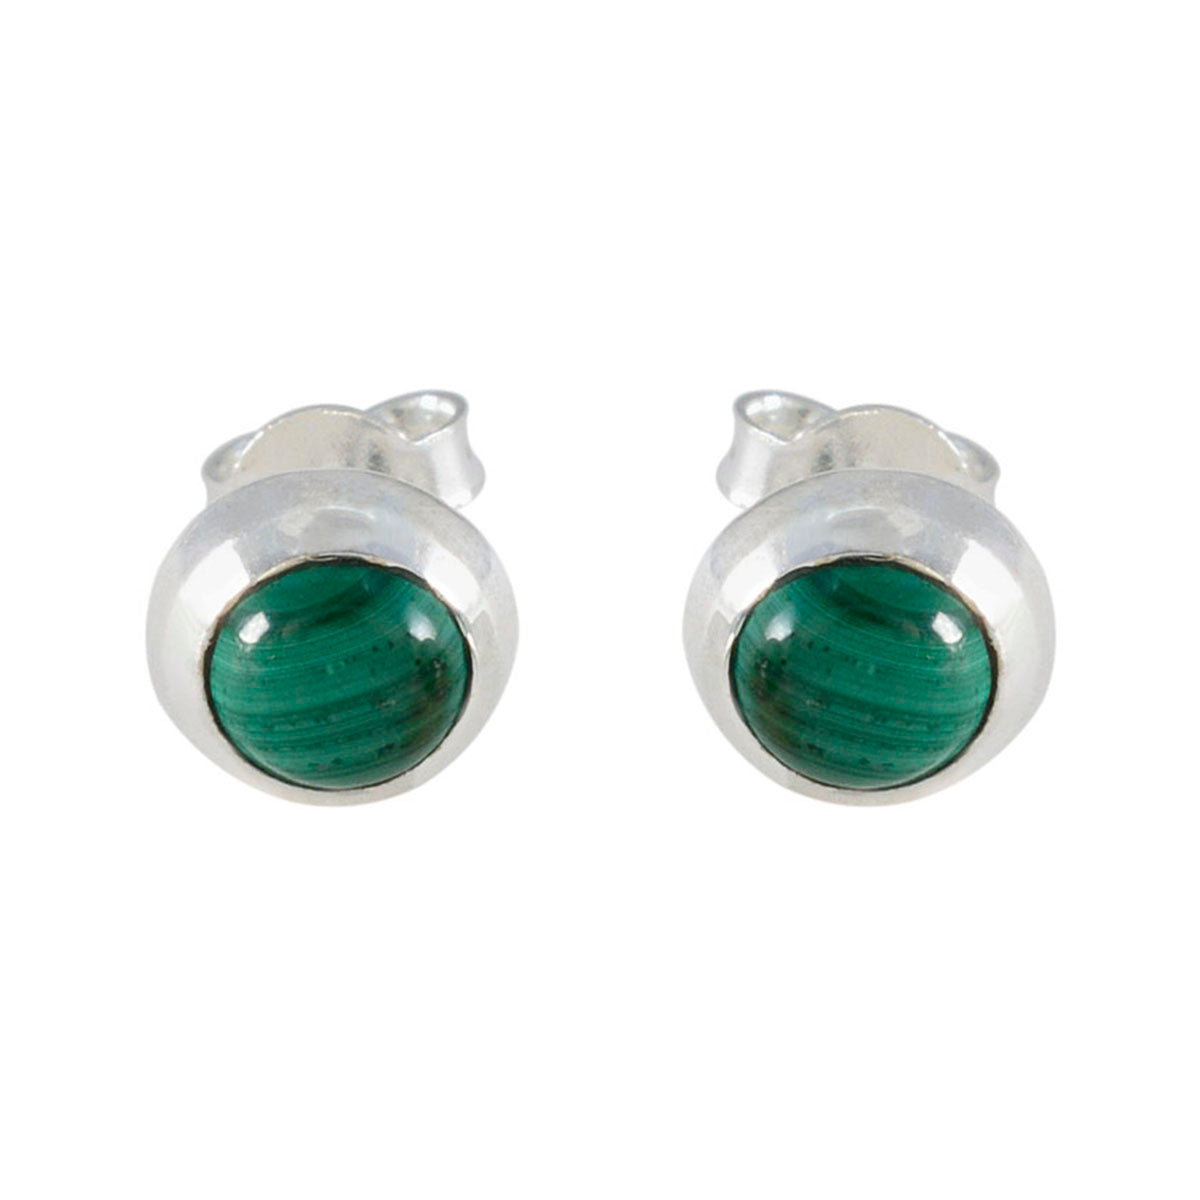 Riyo Smashing 925 Sterling Silver Earring For Demoiselle Malachite Earring Bezel Setting Green Earring Stud Earring